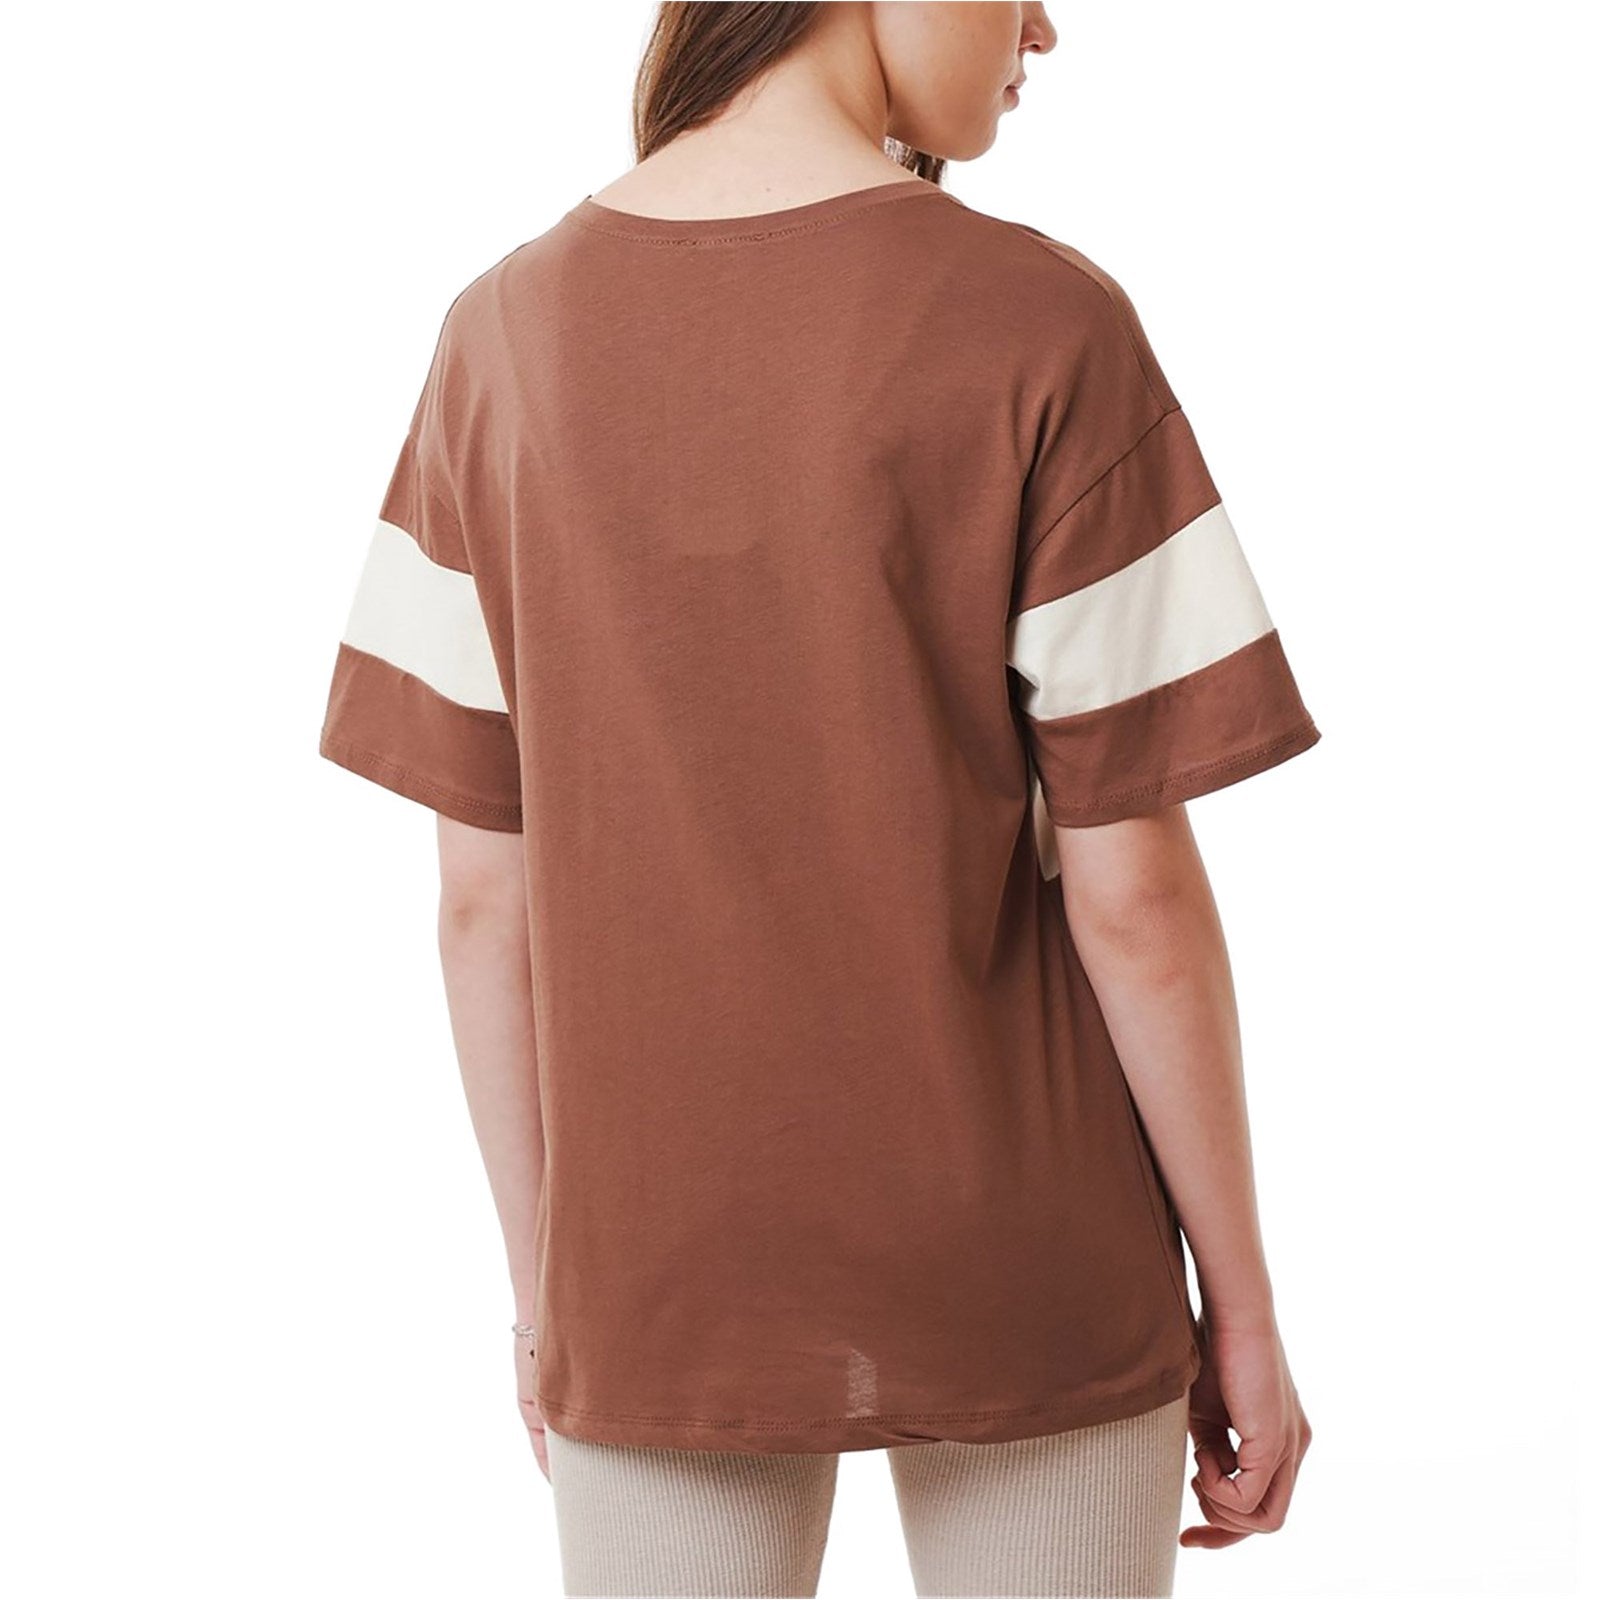 Ambar Women New York City Printed Short Sleeve Tshirt